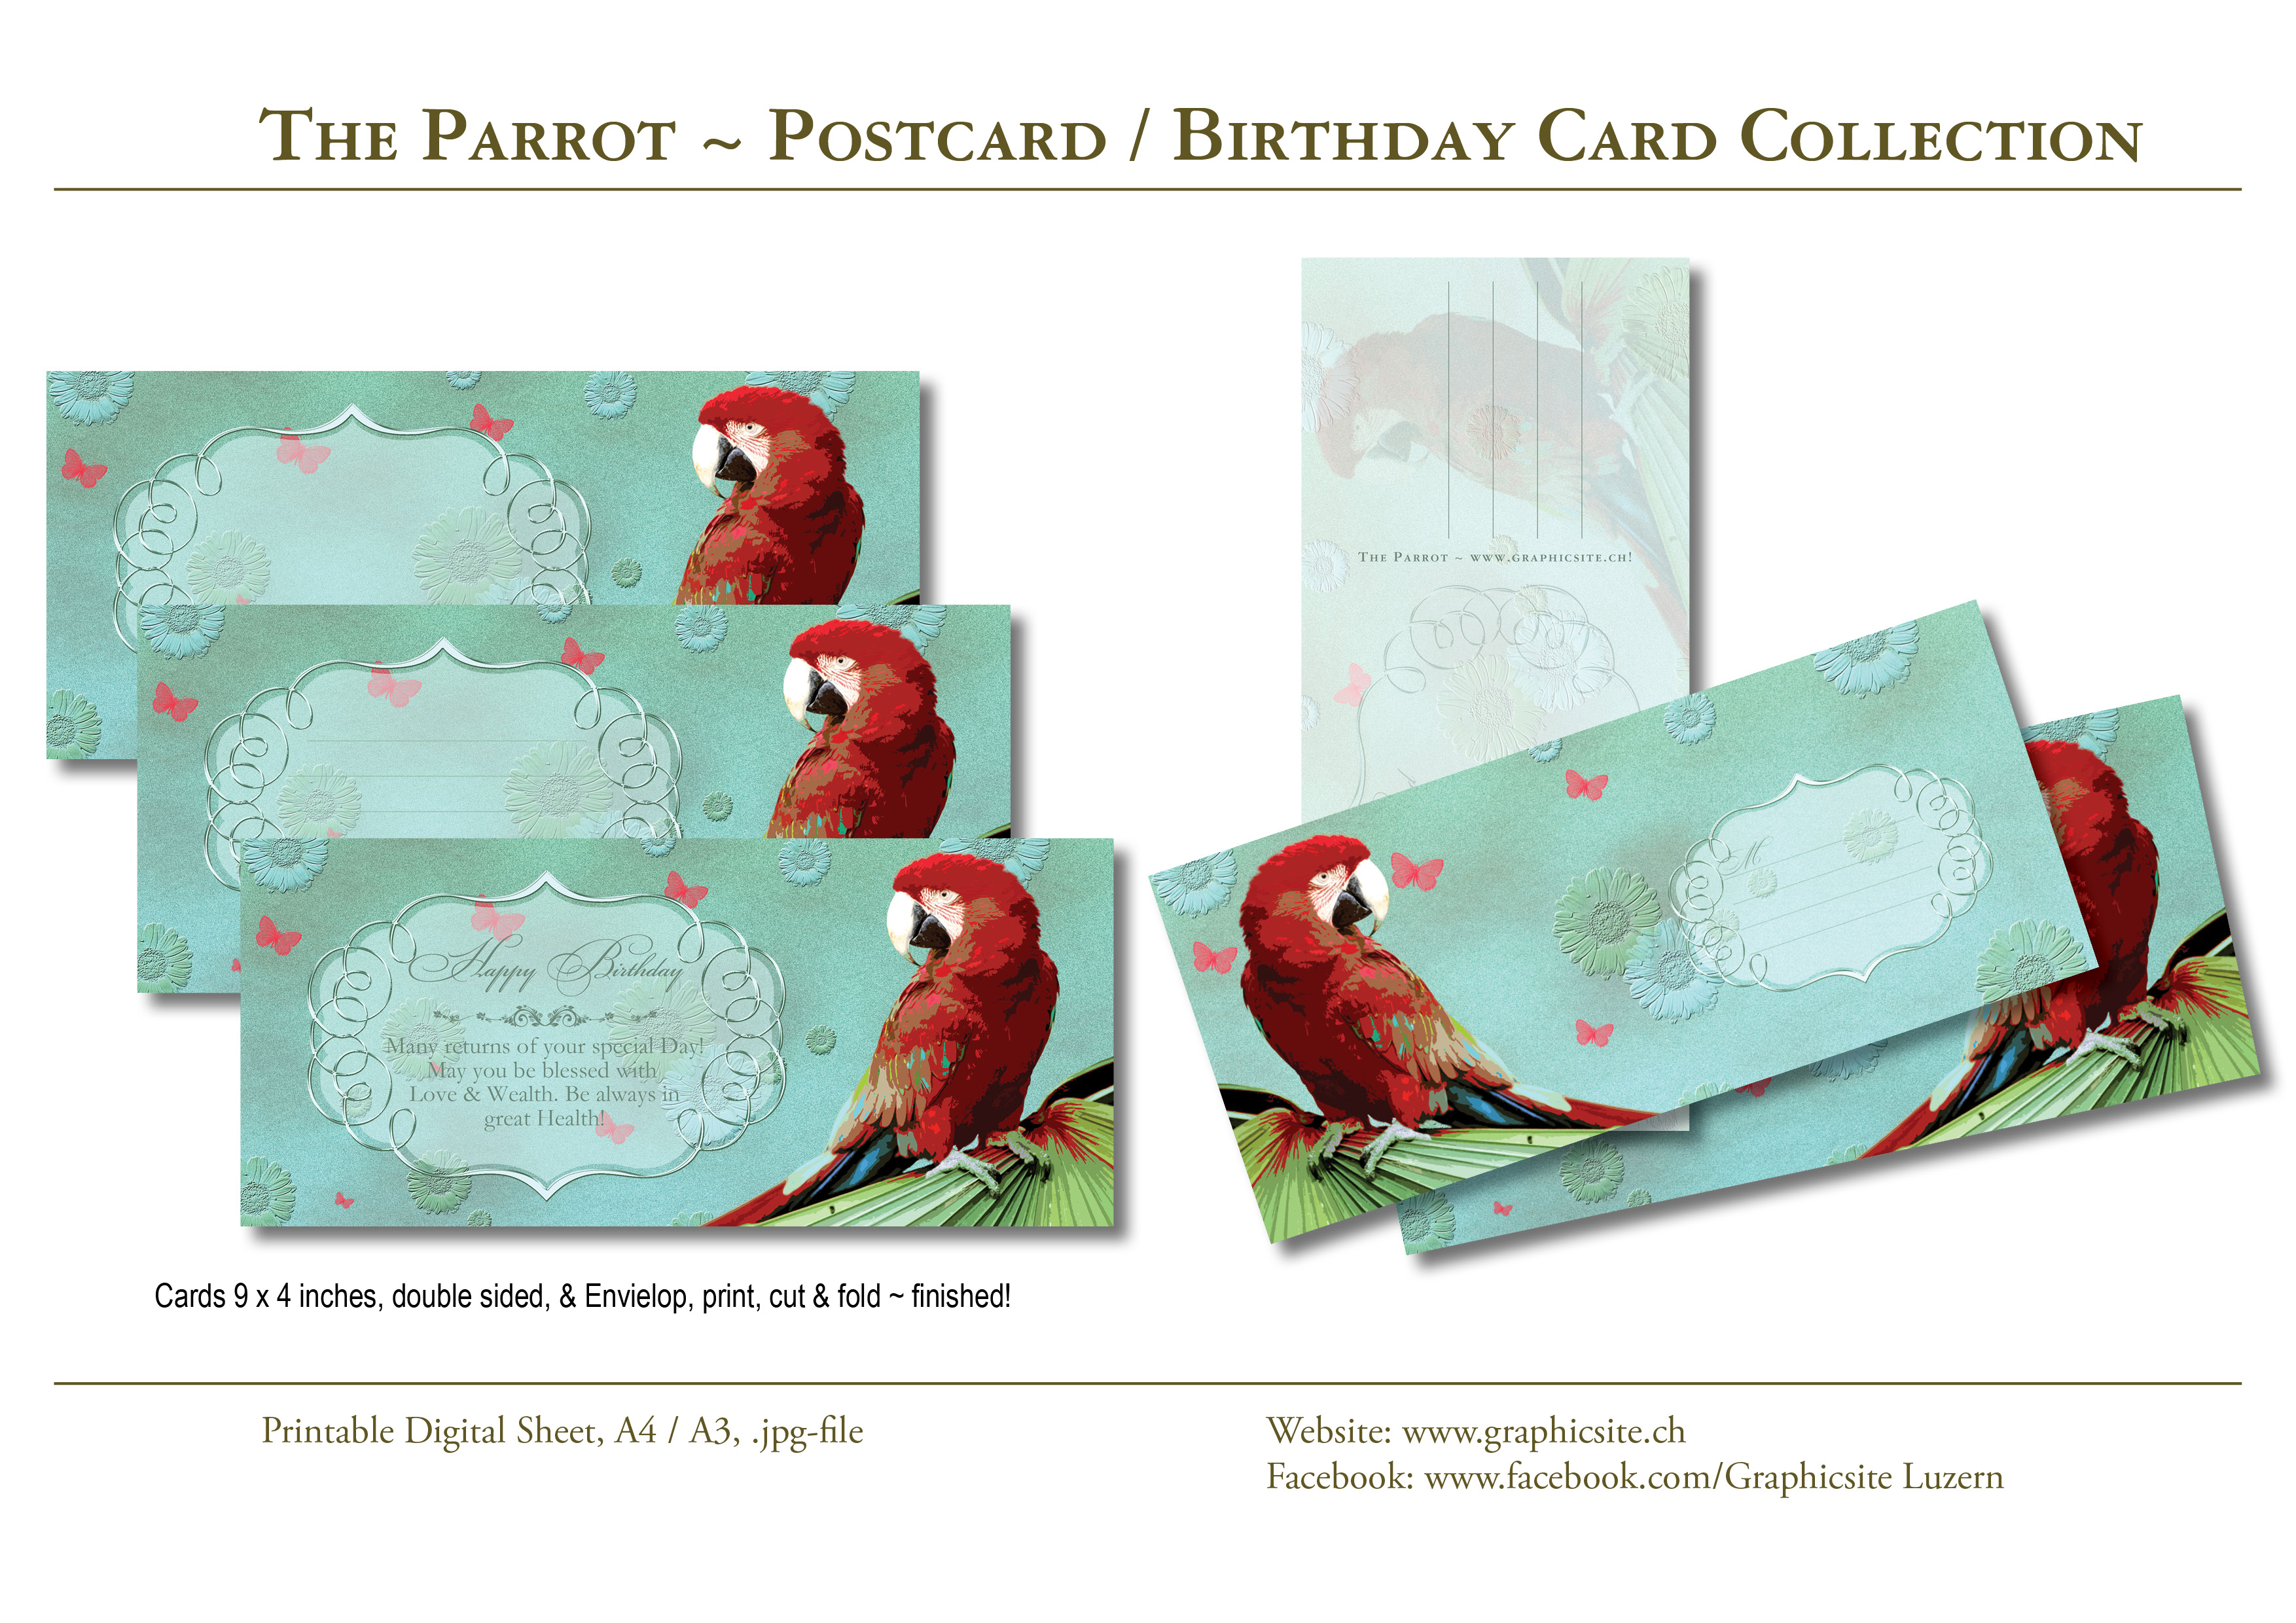 Printable Digital Sheets - Cards - Greeting Cards, Postcards, Envelop, Birthday Cards, Parrot, Bird, Animal, Graphic Design, Luzern